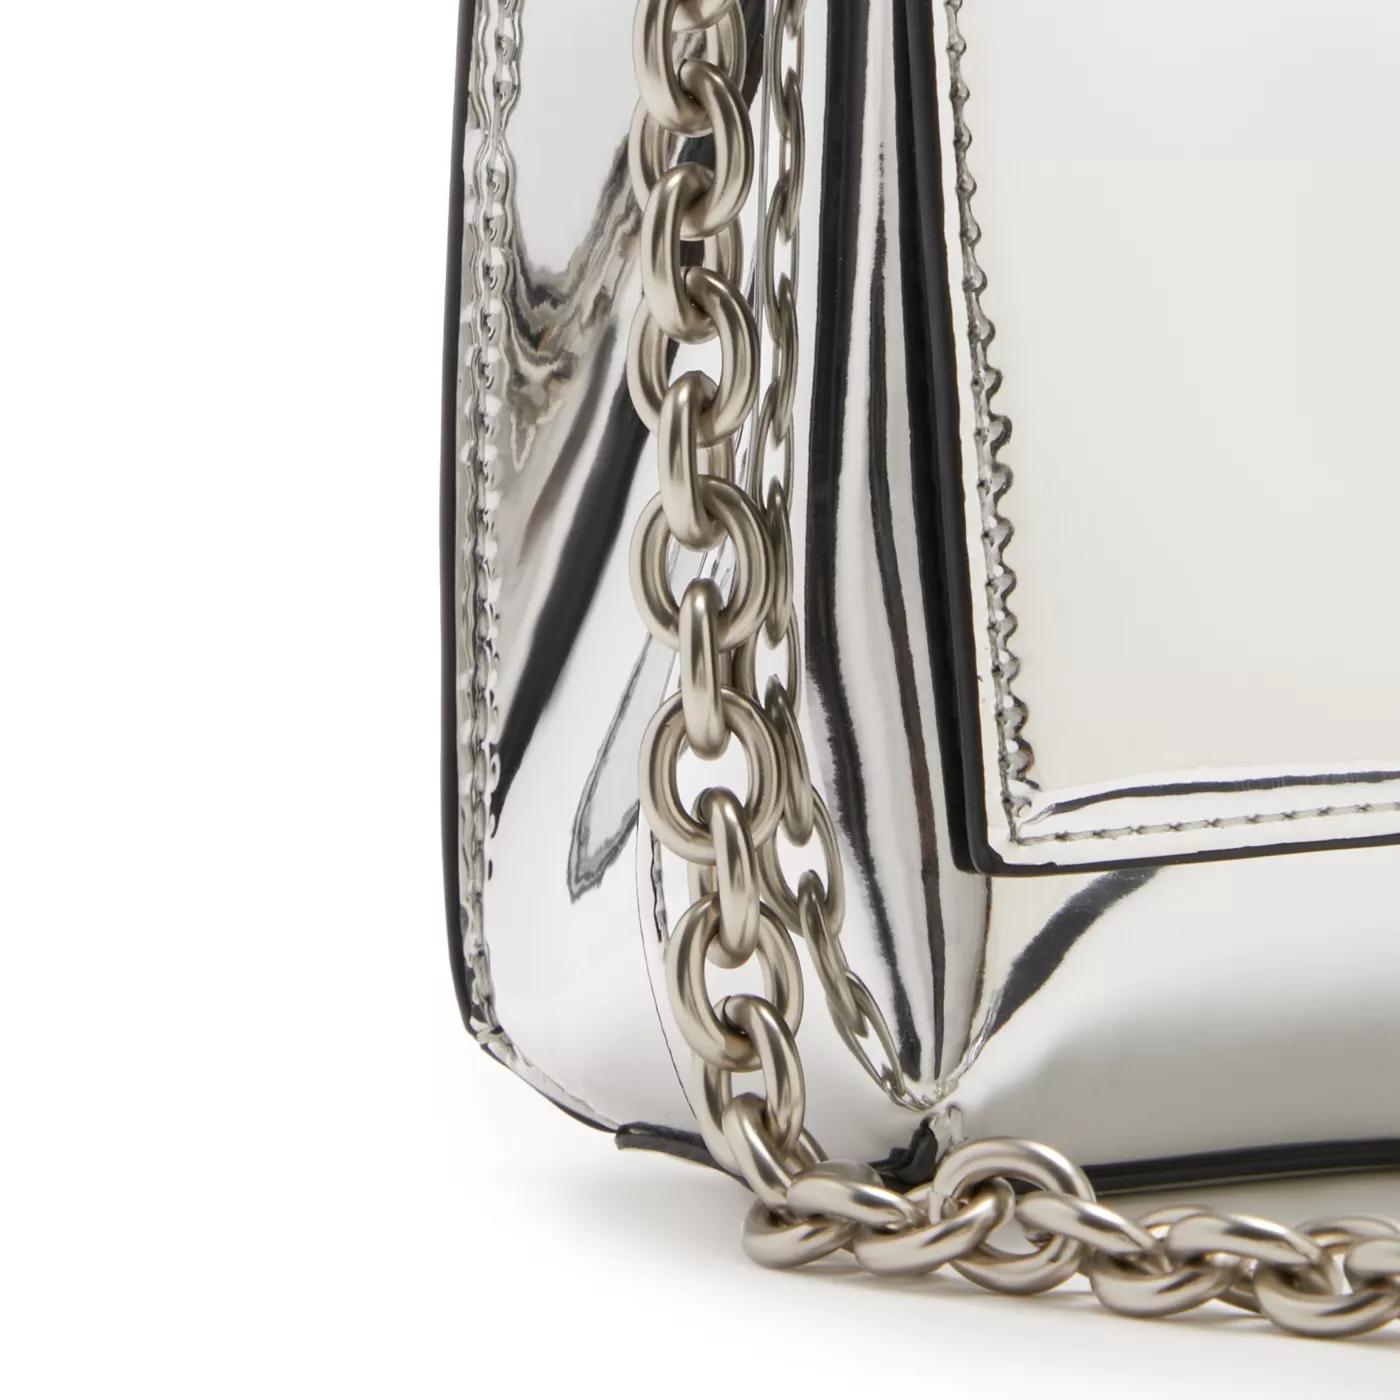 Calvin Klein Crossbody bags Sculpted Silberfarbene Umhängetasche in zilver